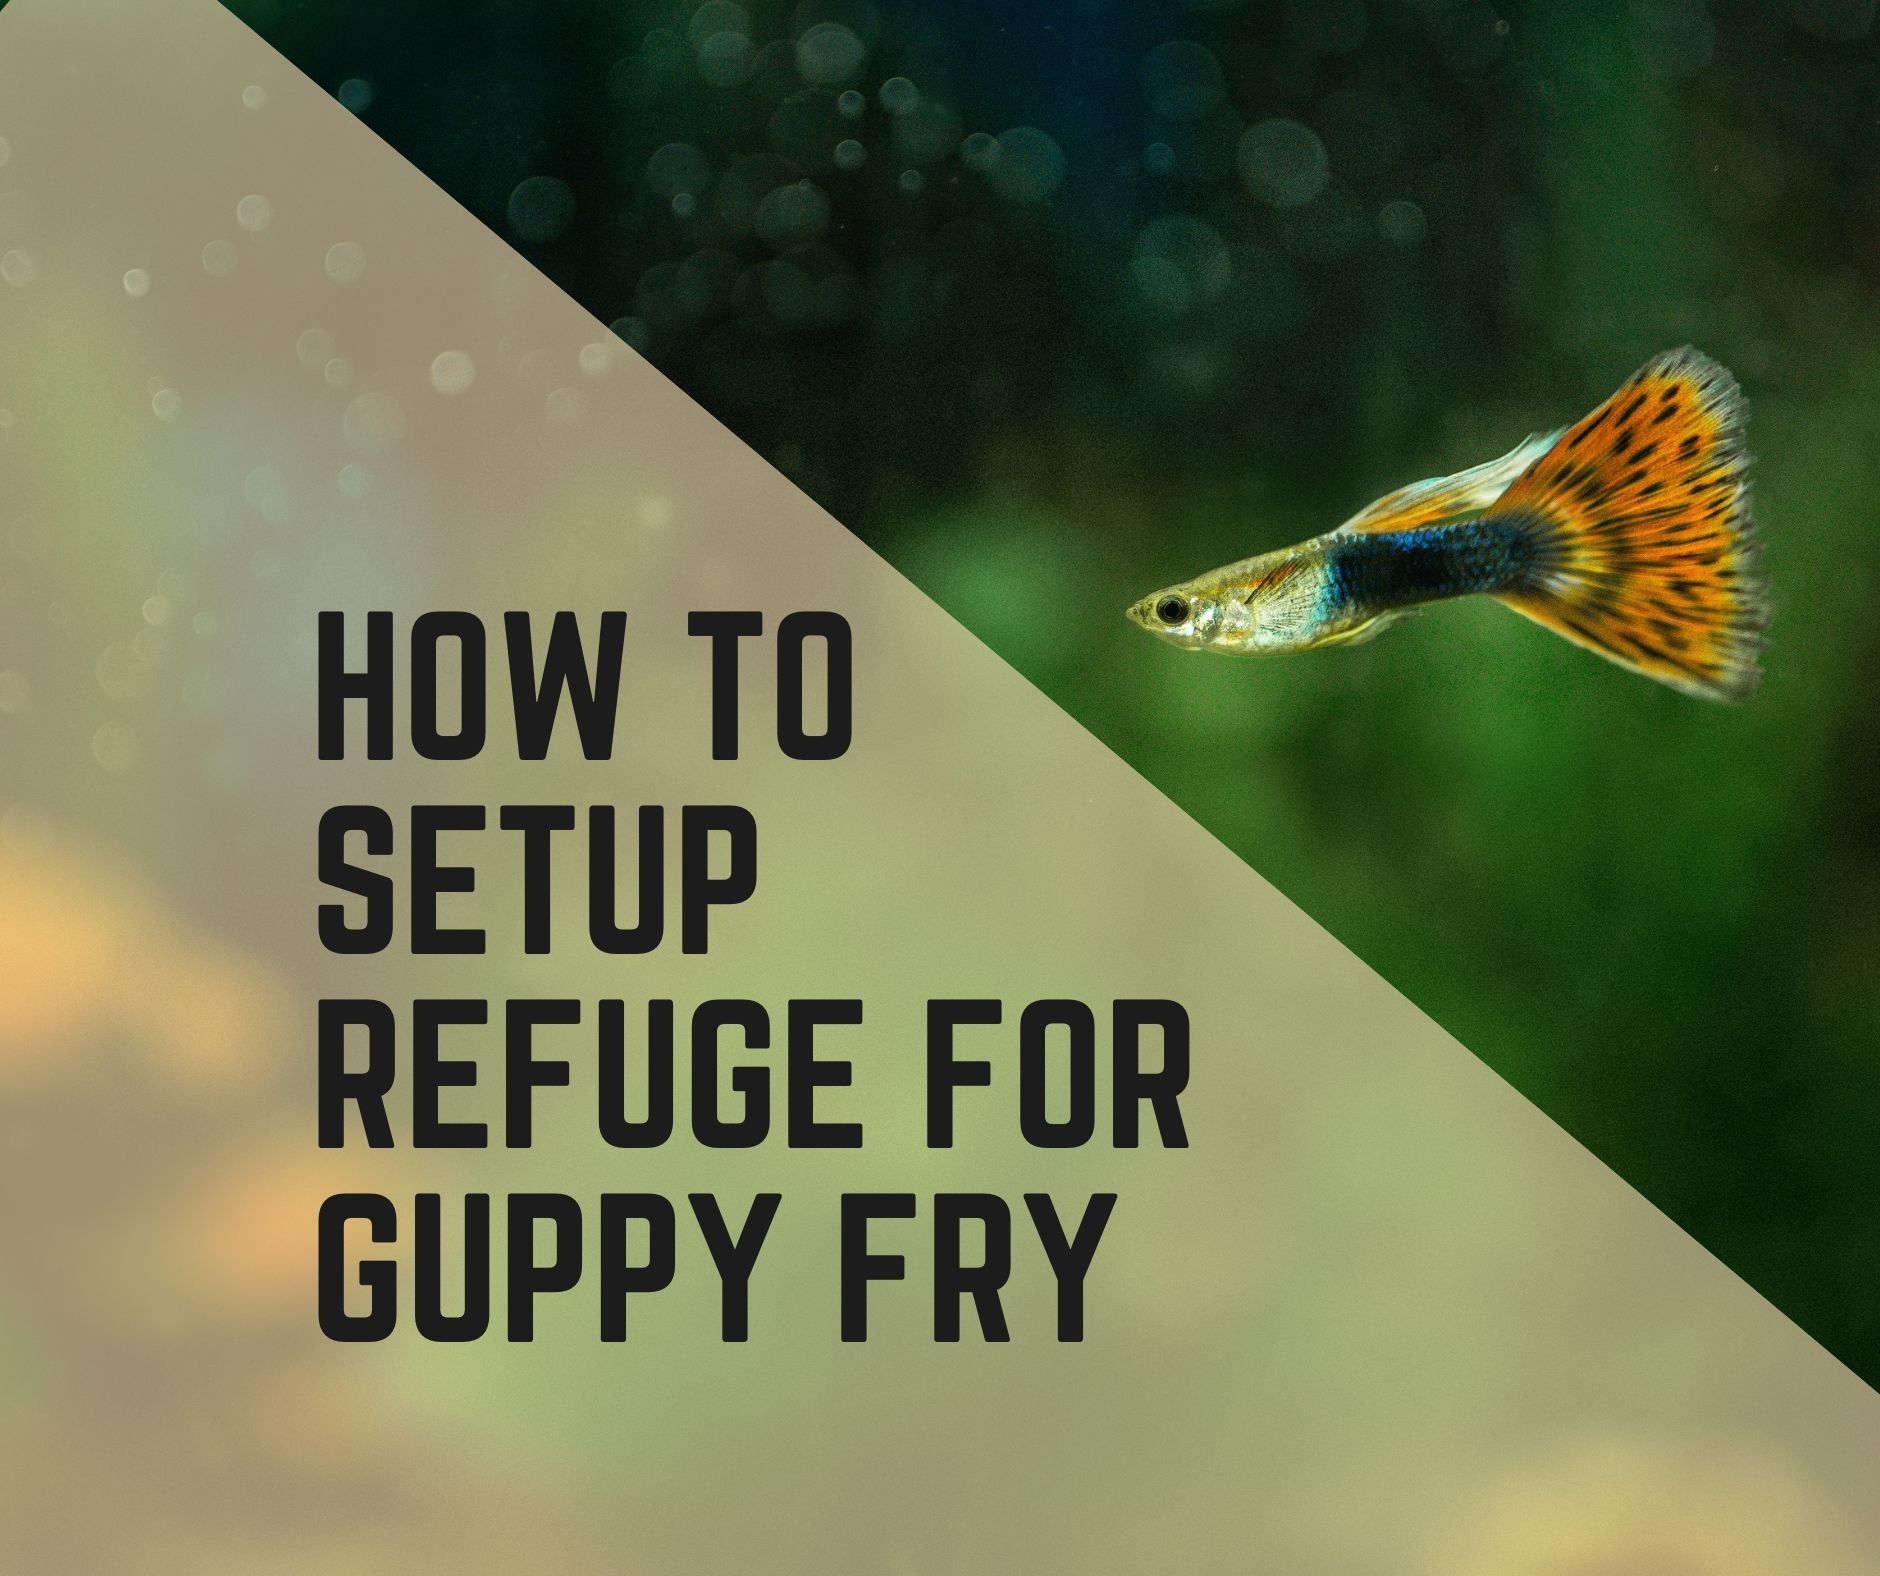 How to Setup Refuge for Guppy Fry